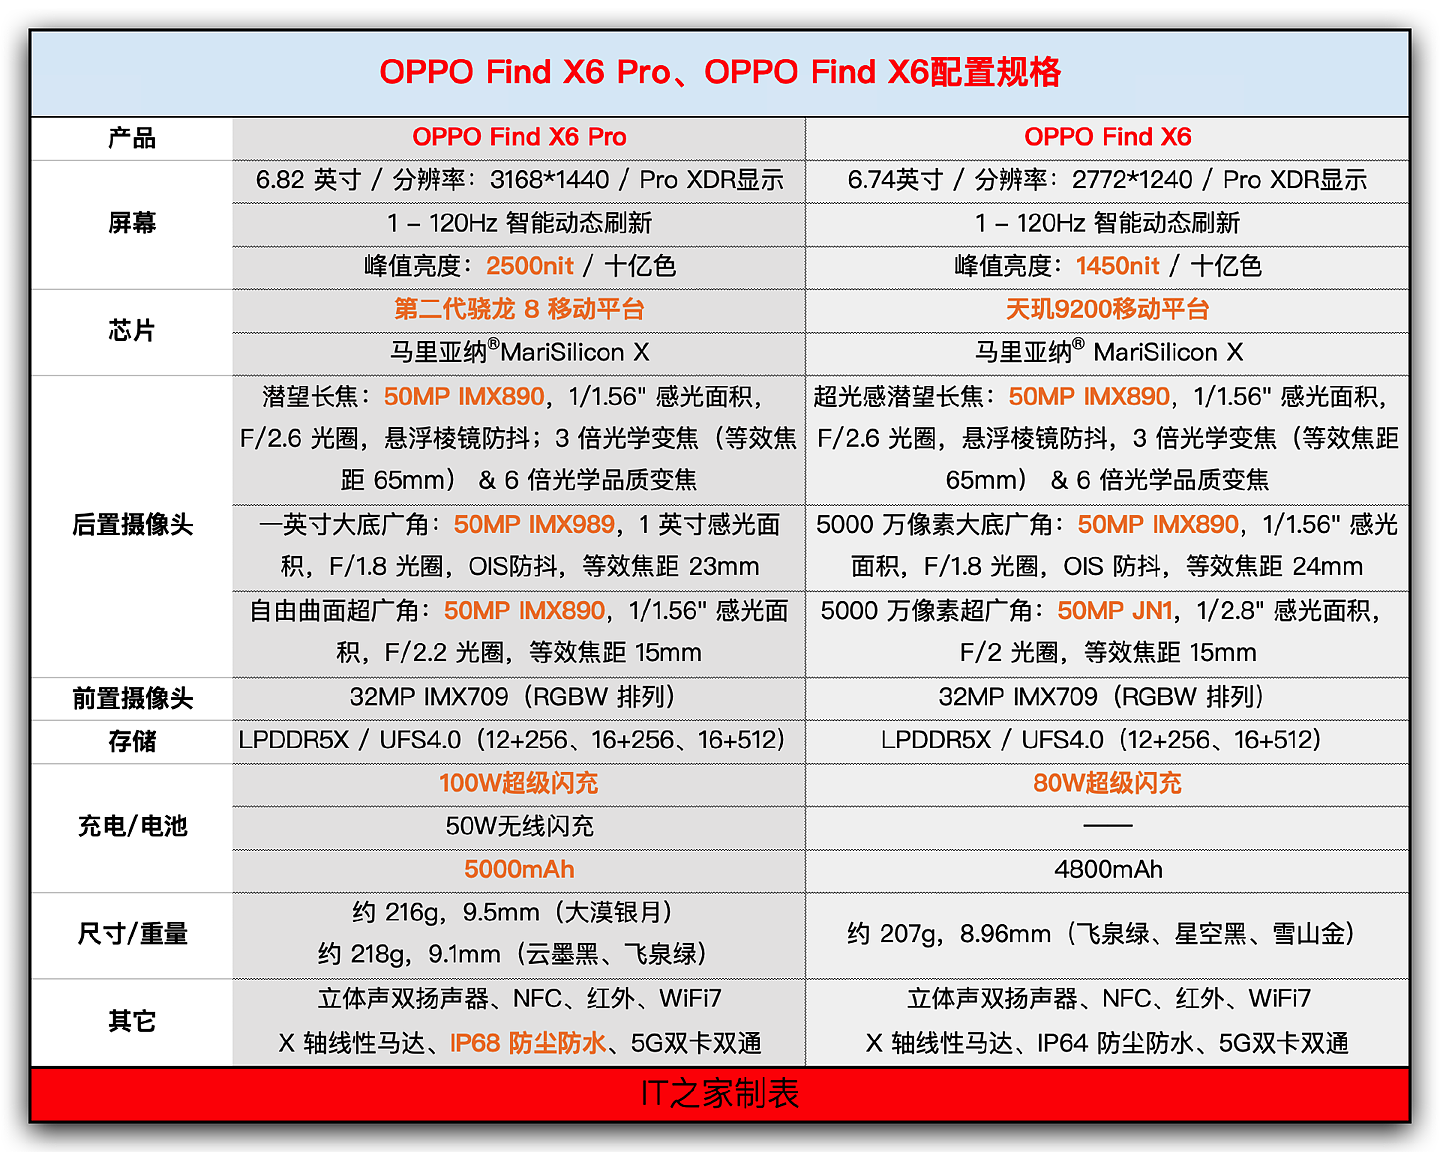 【IT之家开箱】OPPO Find X6 Pro 飞泉绿、云墨黑图赏：设计服务影像，专业感受强烈 - 16